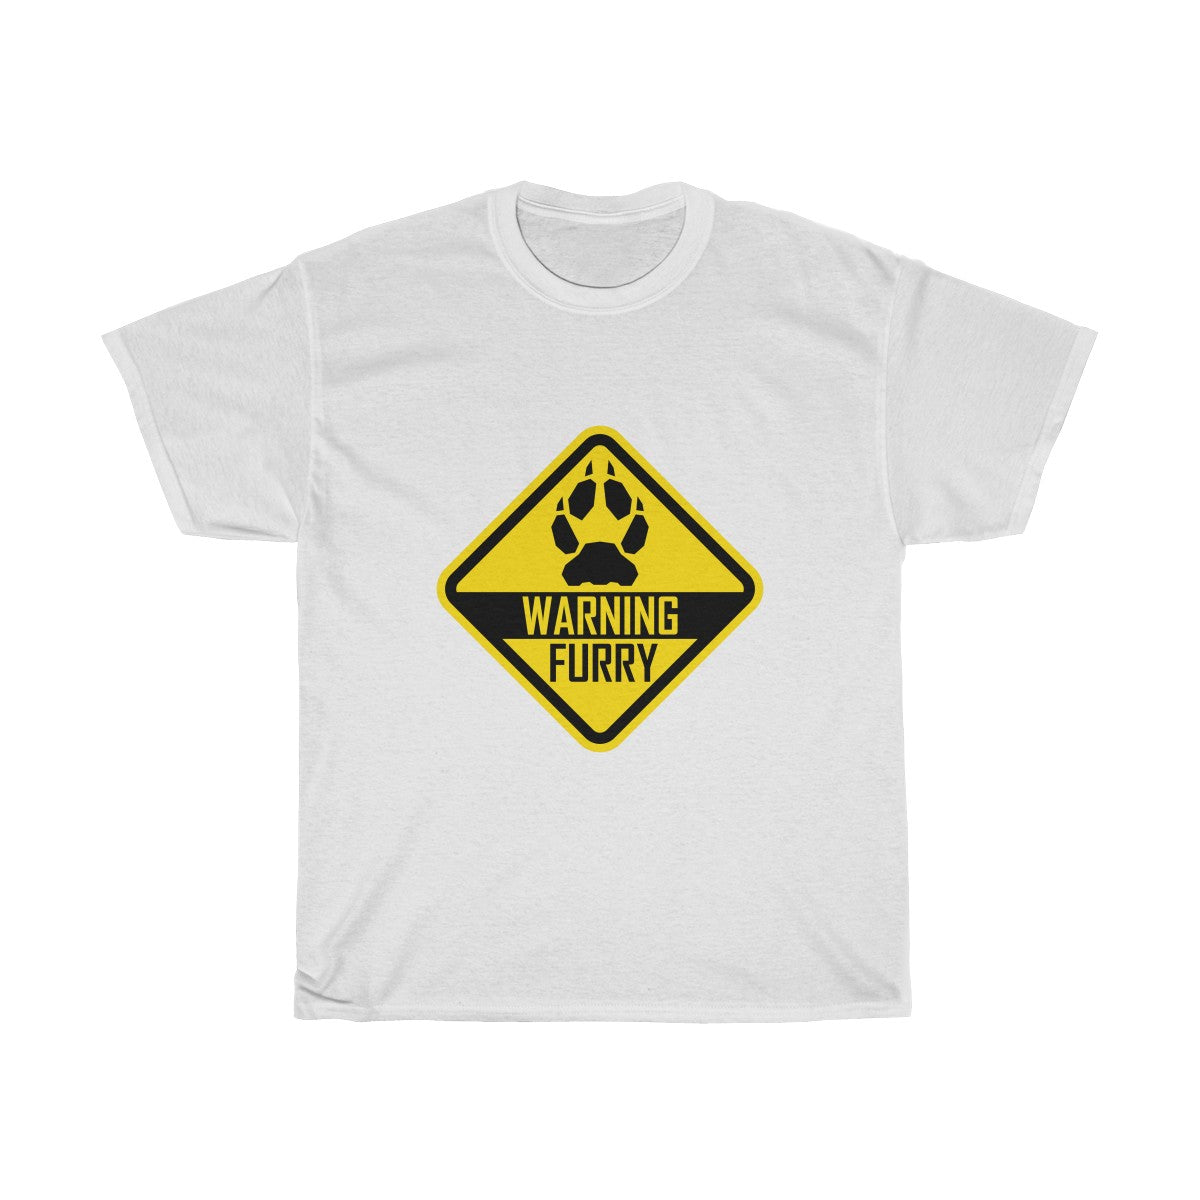 Warning Fox - T-Shirt T-Shirt Wexon White S 